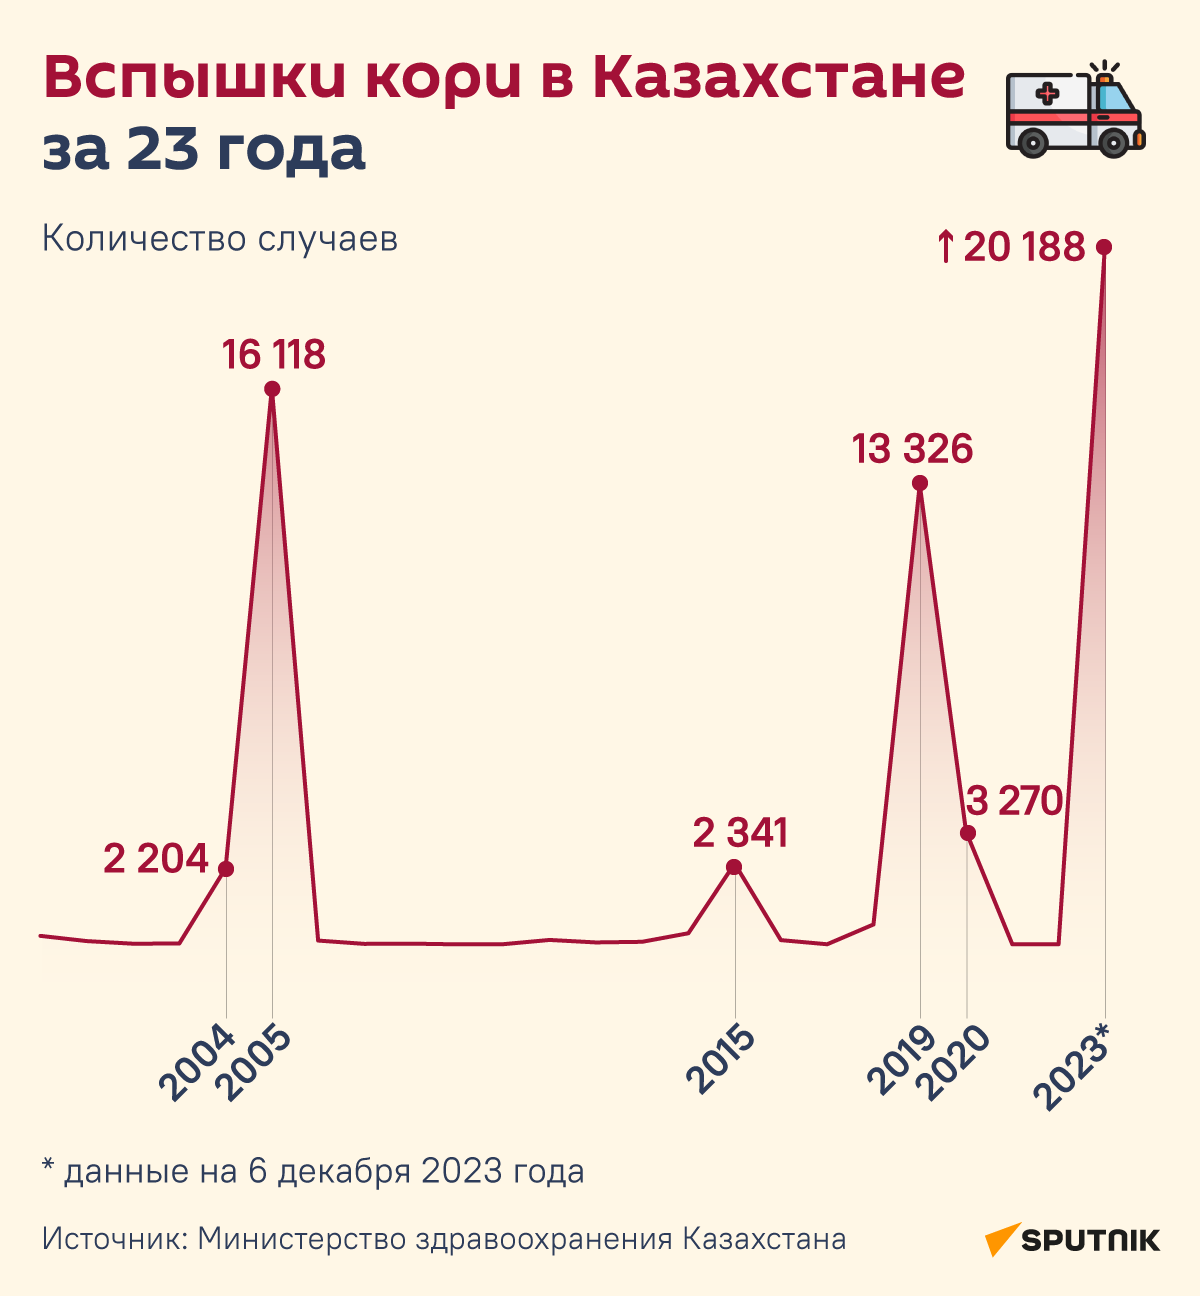 Статистика вспышек кори в Казахстане - Sputnik Казахстан